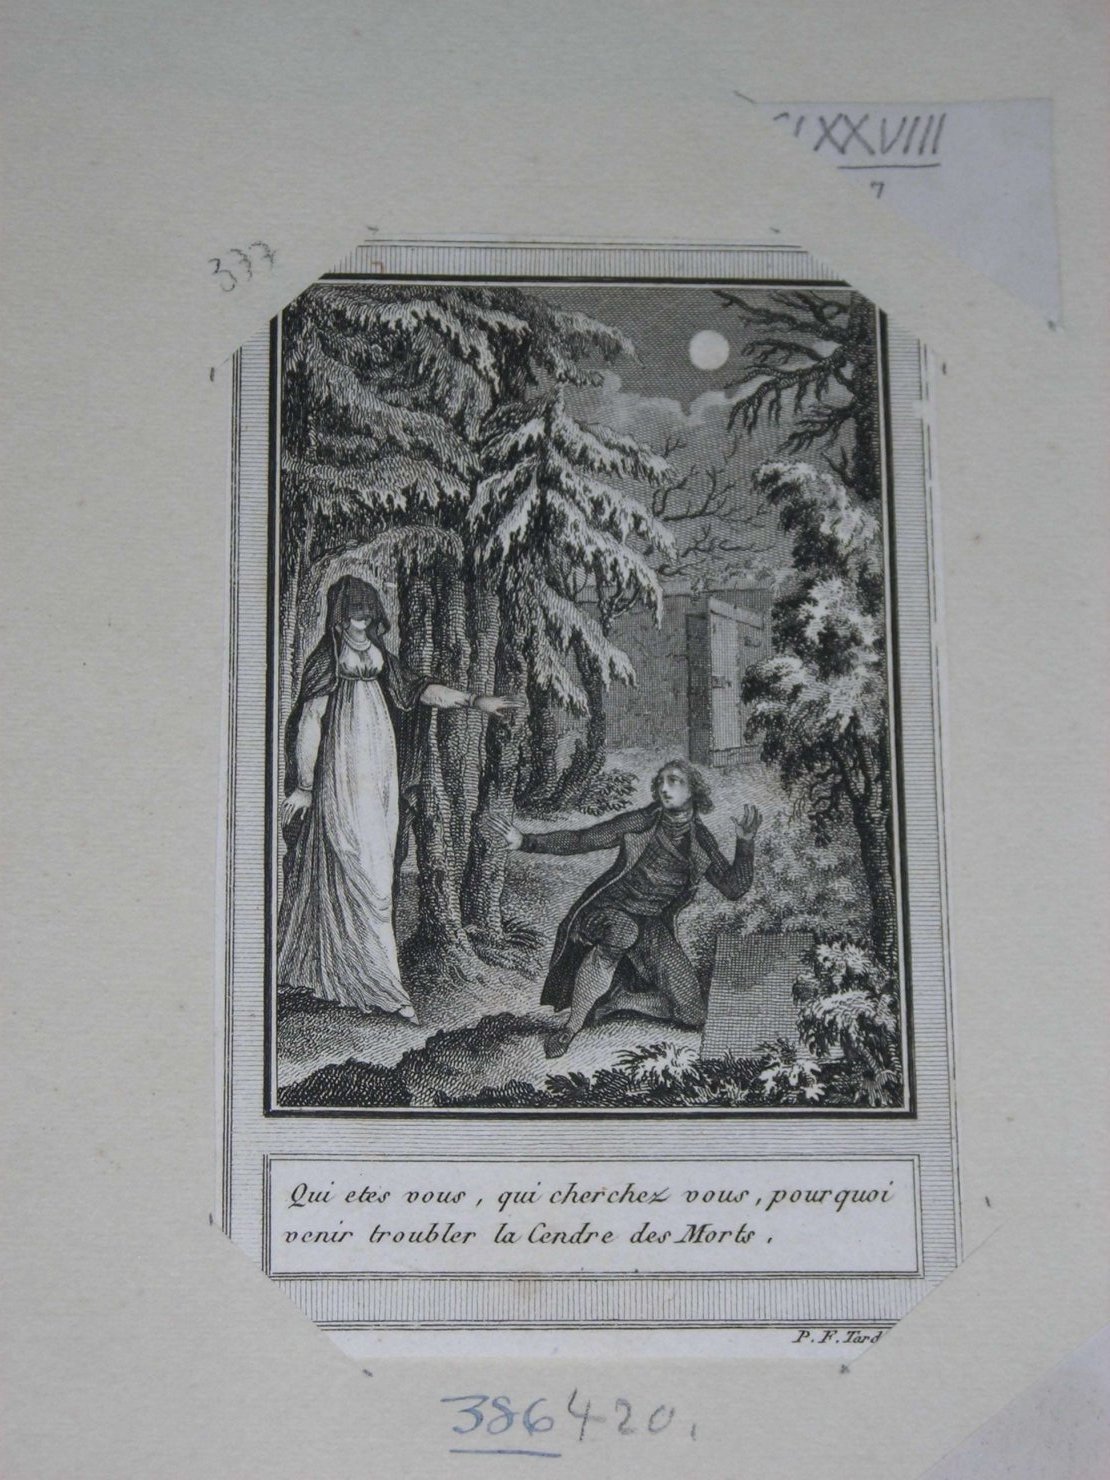 cimitero di notte (stampa) di Tardieu Pierre François, Binet Louis (sec. XIX)